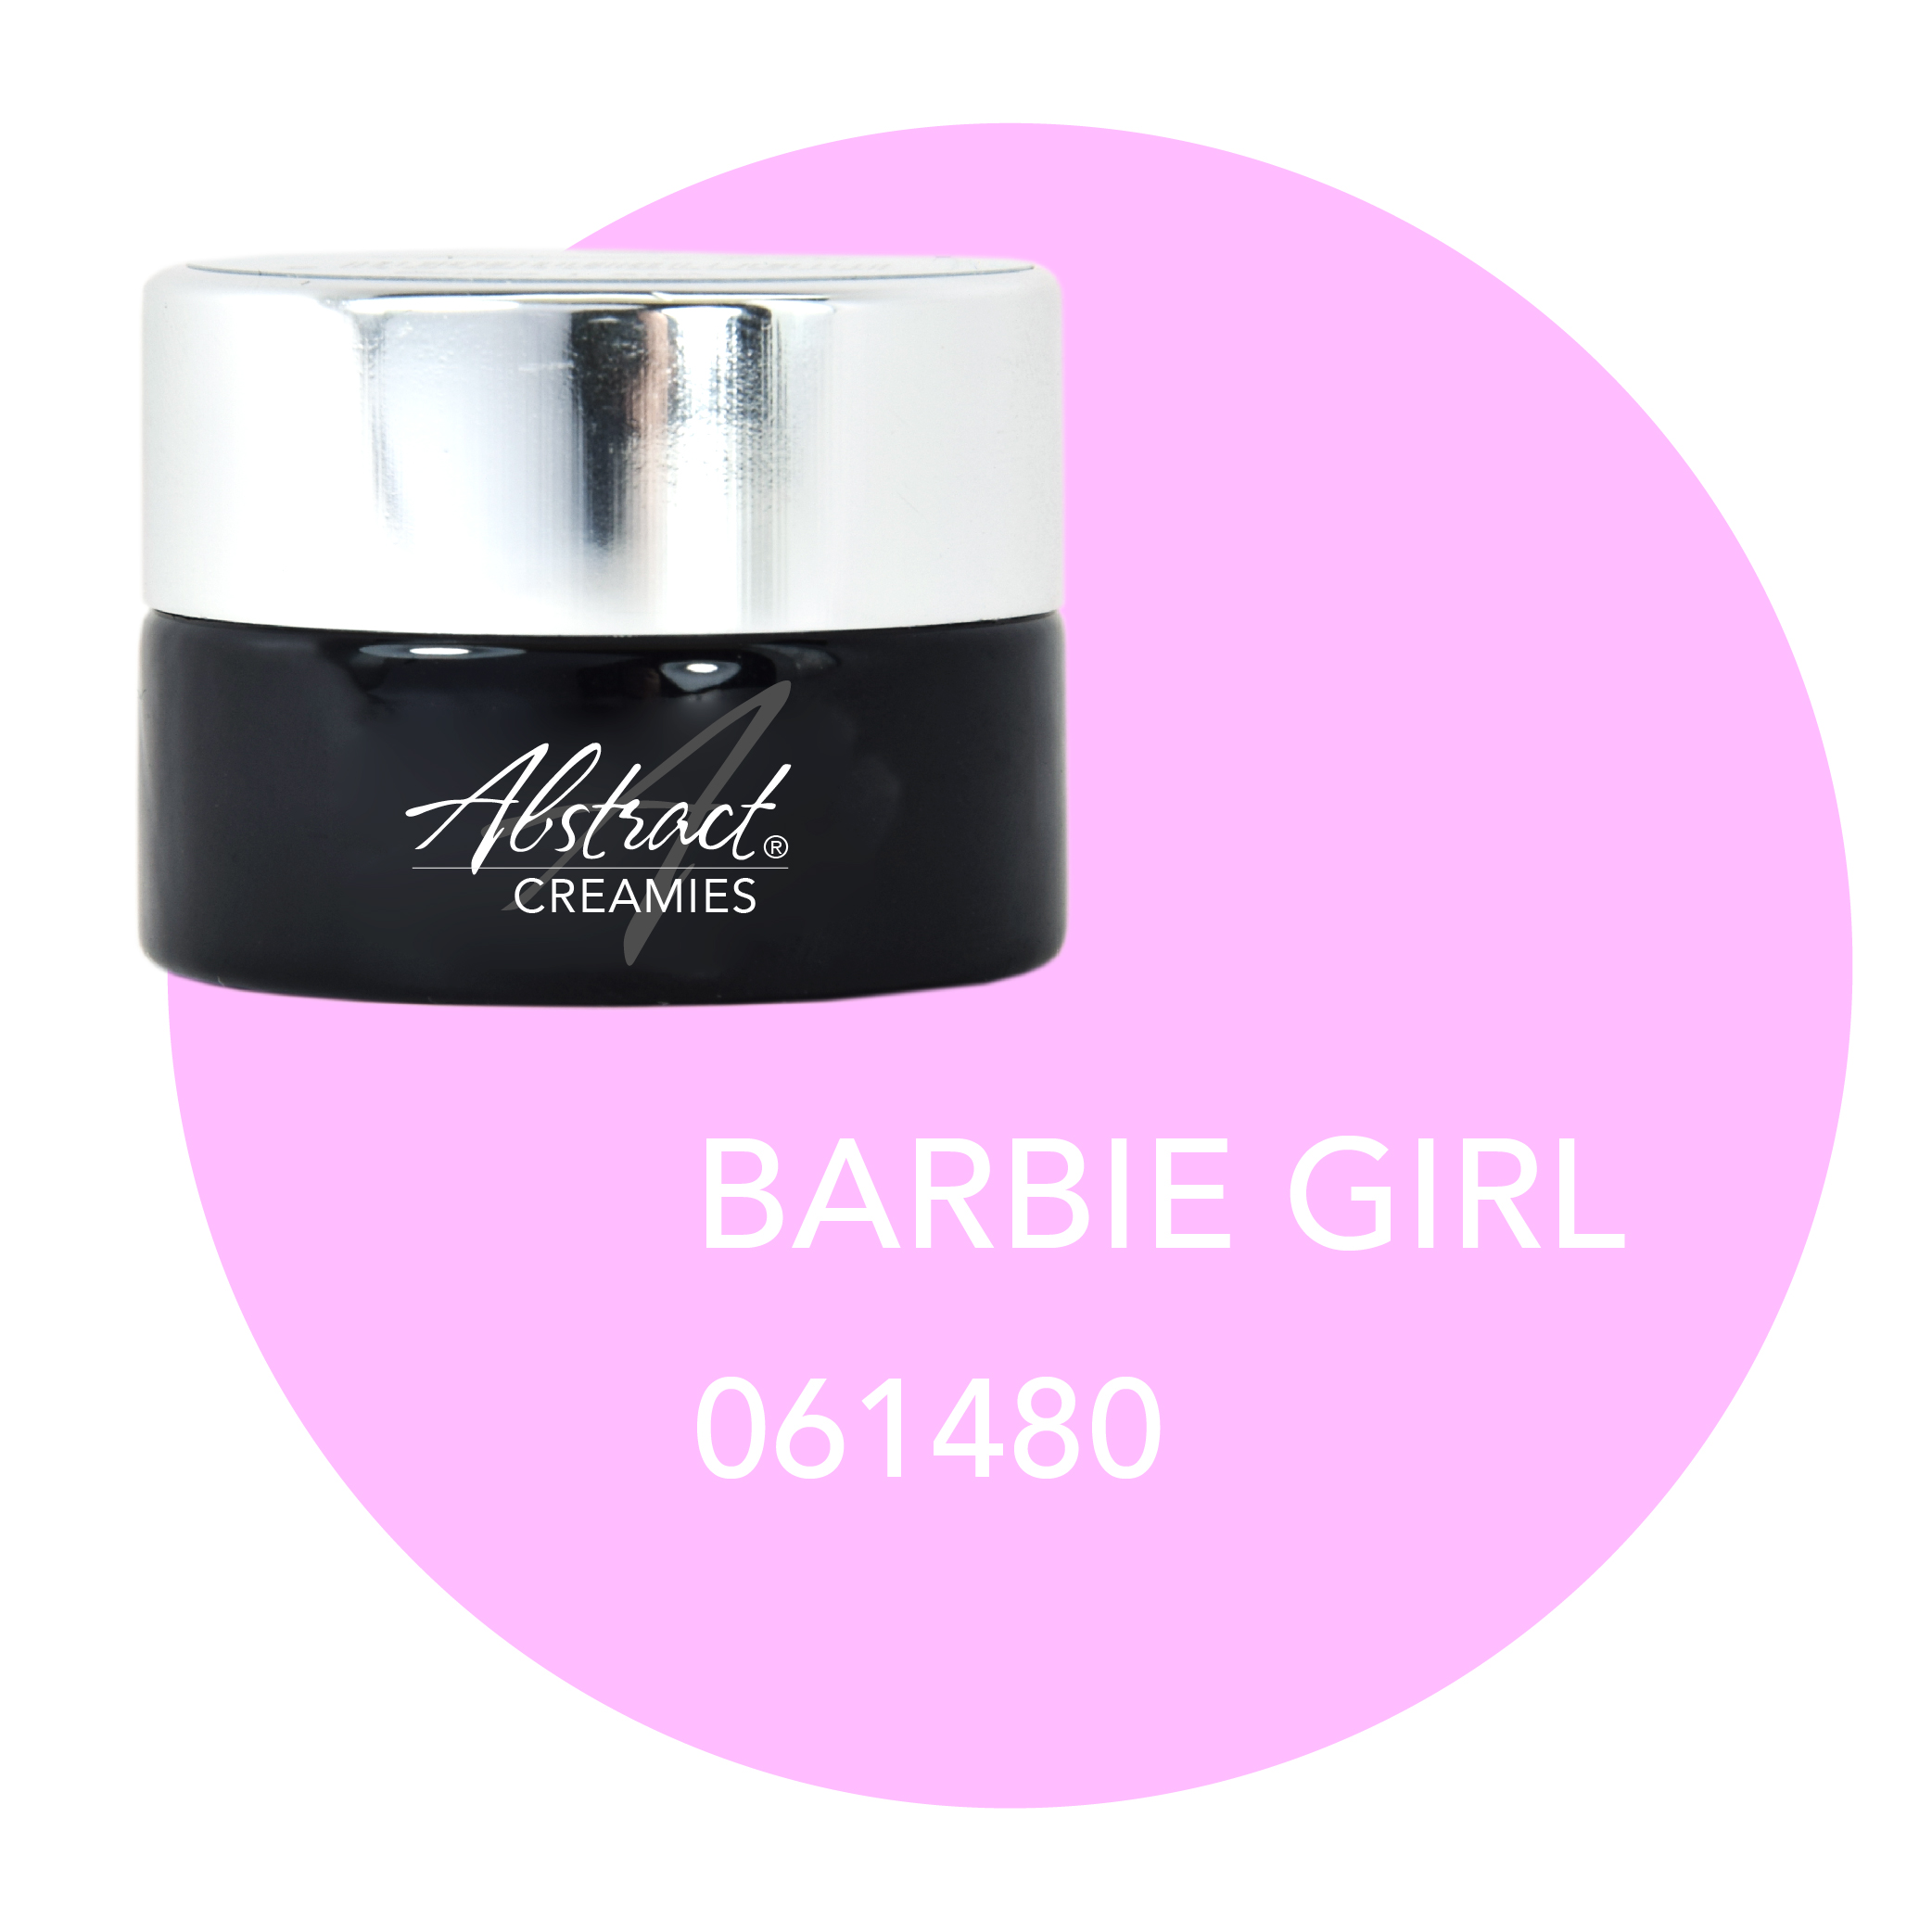 Barbie Girl 5ml Creamies (I Love The 80’s), Abstract |  061480